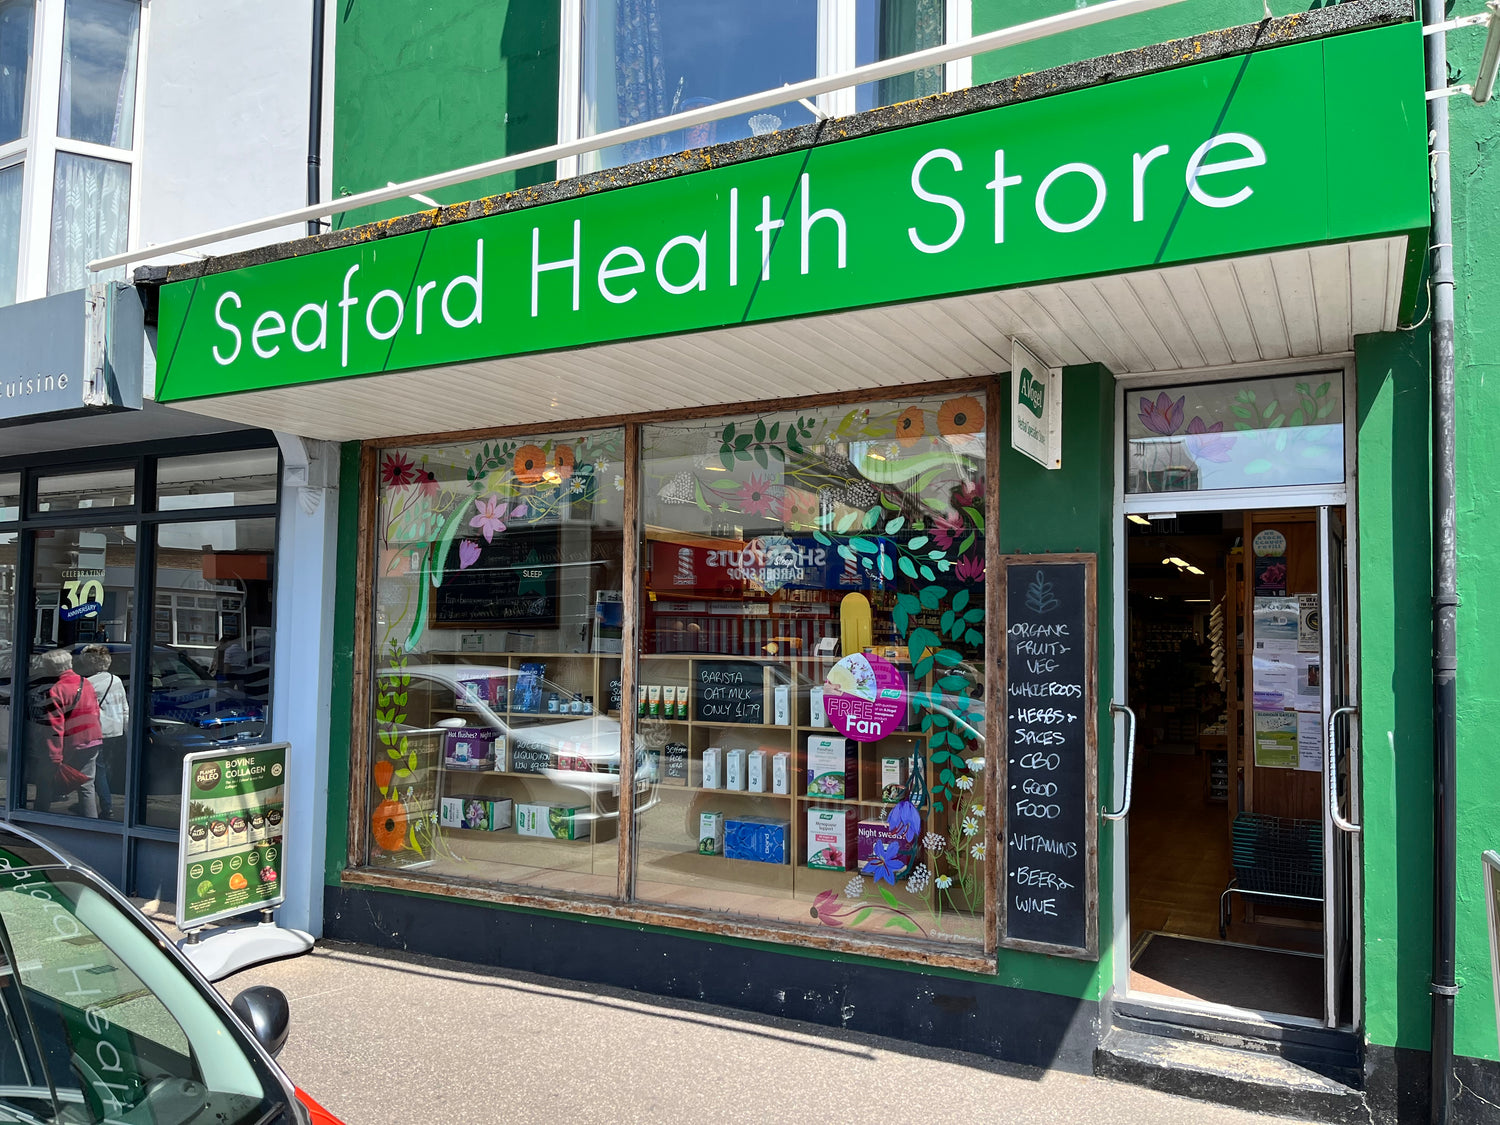 Seaford Health Store